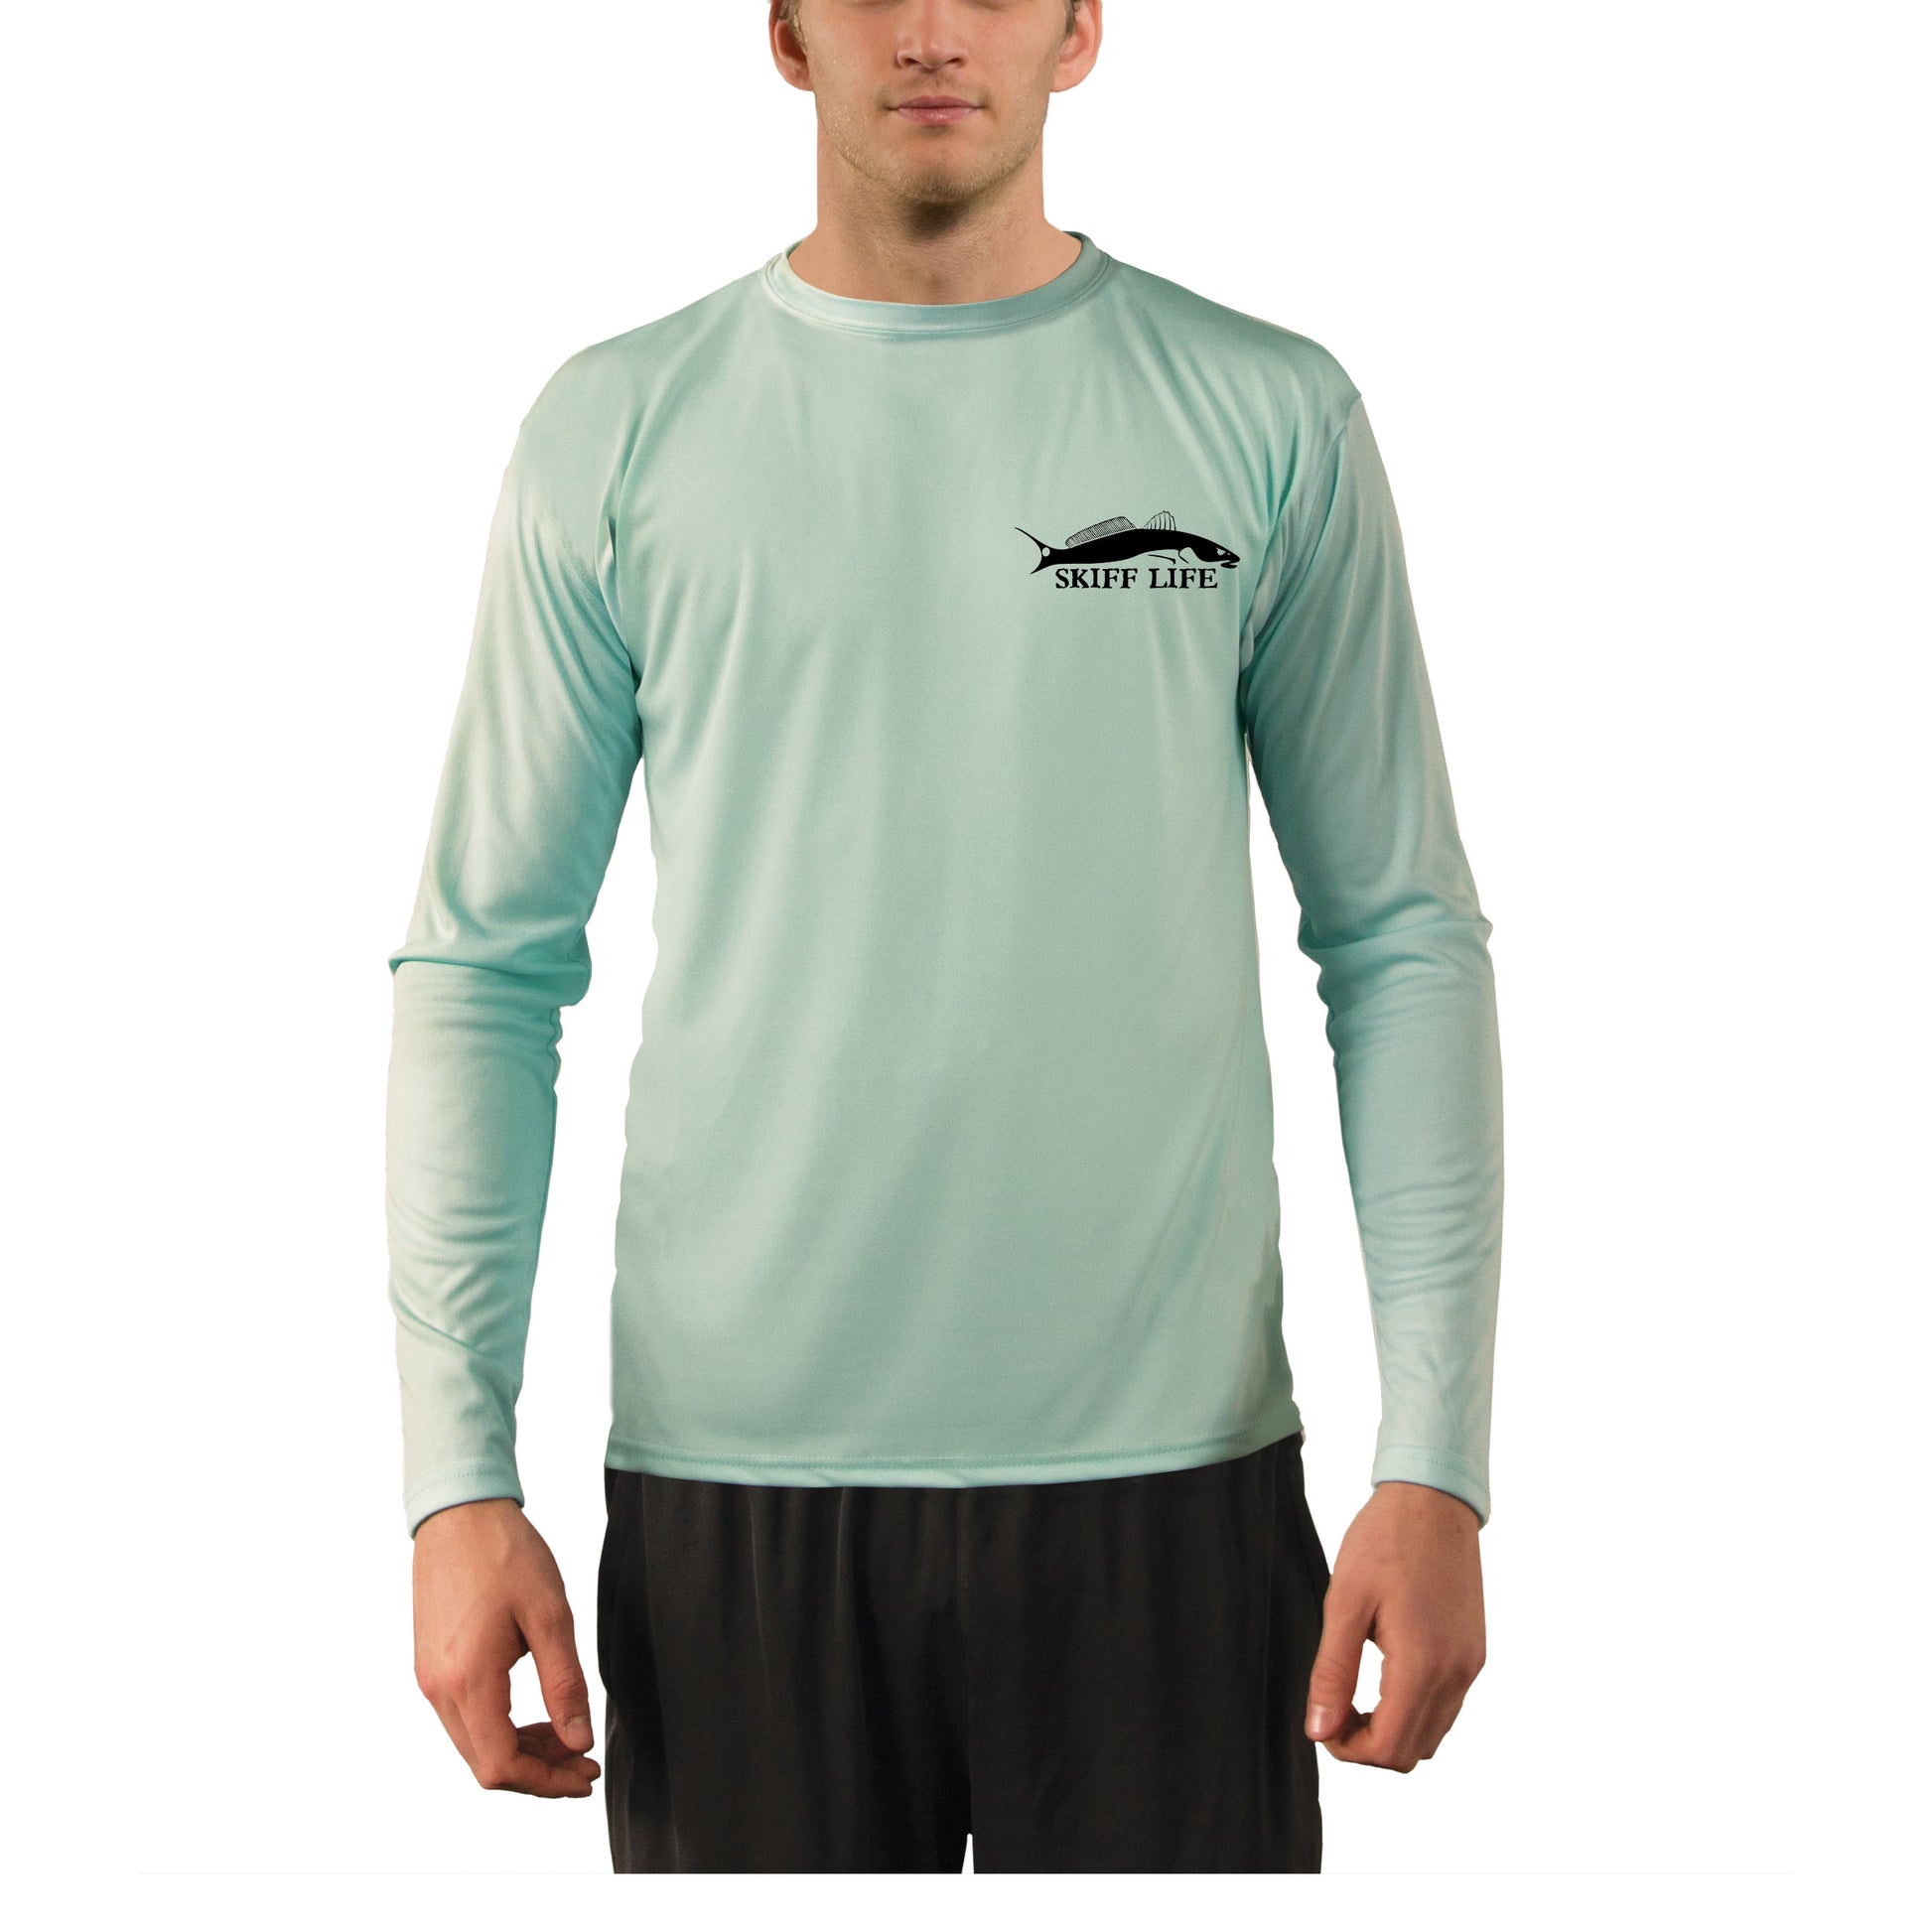 United States Tarpon Attack Flat Fishing Premium T-Shirt, Long Sleeve / 4XL